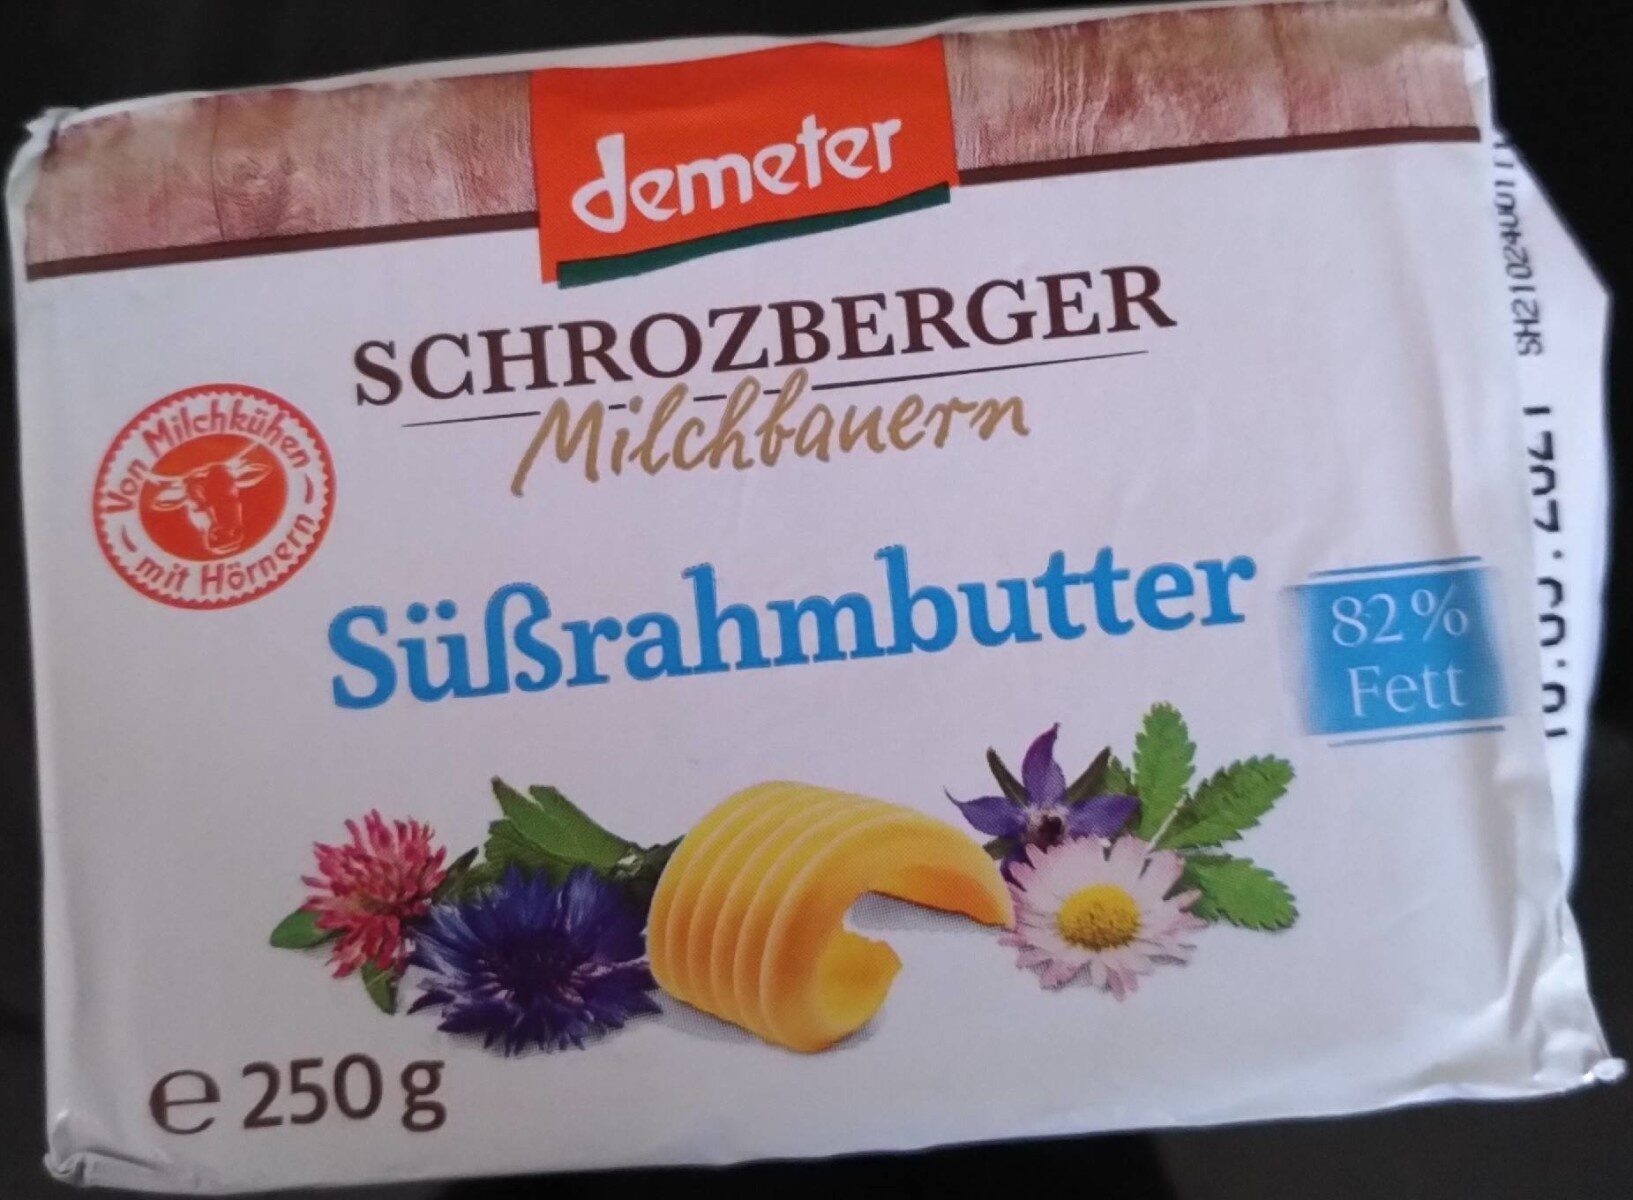 Süßrahmbutter Schrozberger milchbauern - Product - de